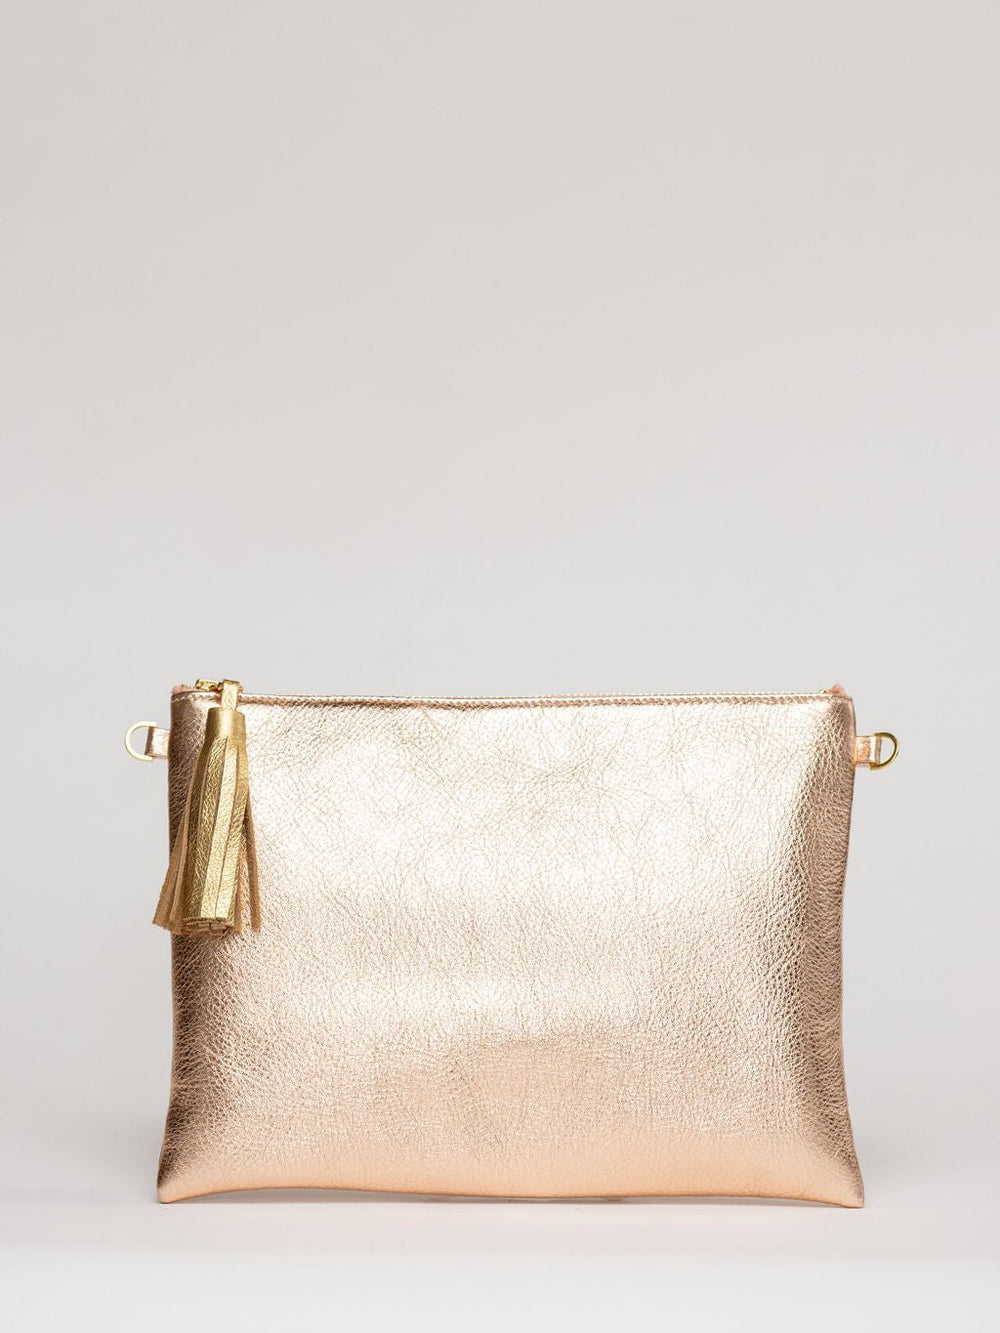 Beau & Ro Clutch + Crossbody Rose Gold Metallic / One Size The Sconset Clutch + Crossbody Bag | Rose Gold